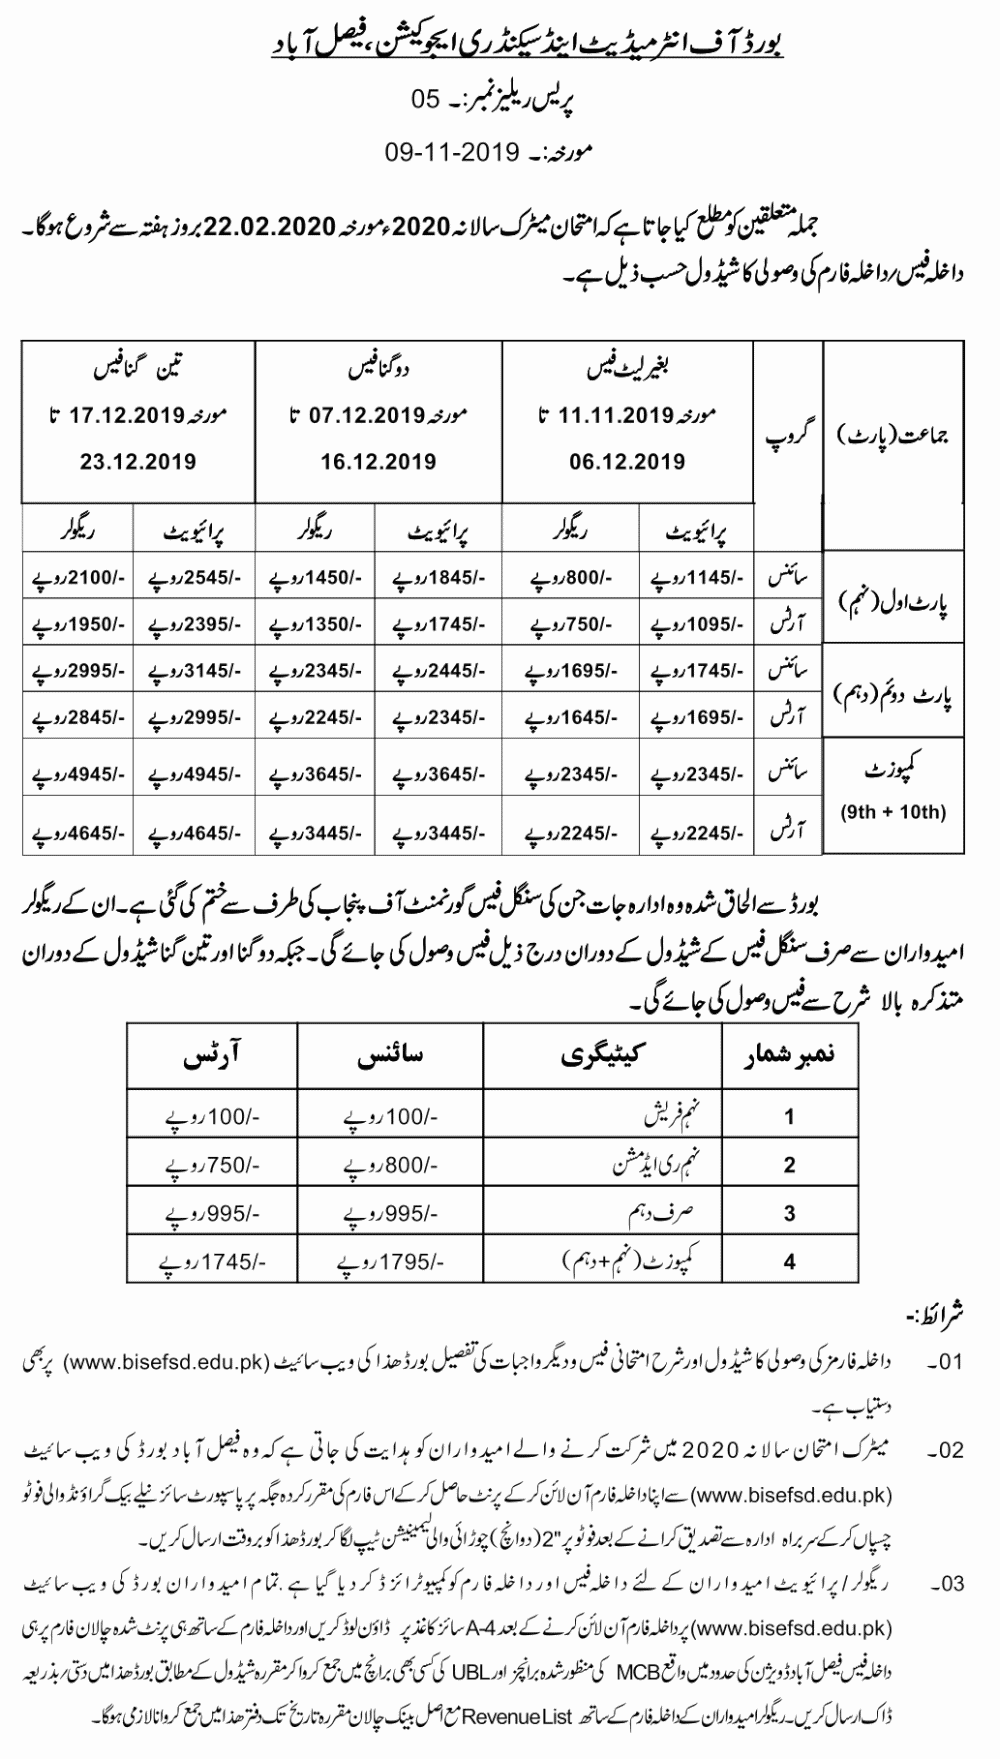 Faisalabad-board-ssc-exam-schedule-2020-page1